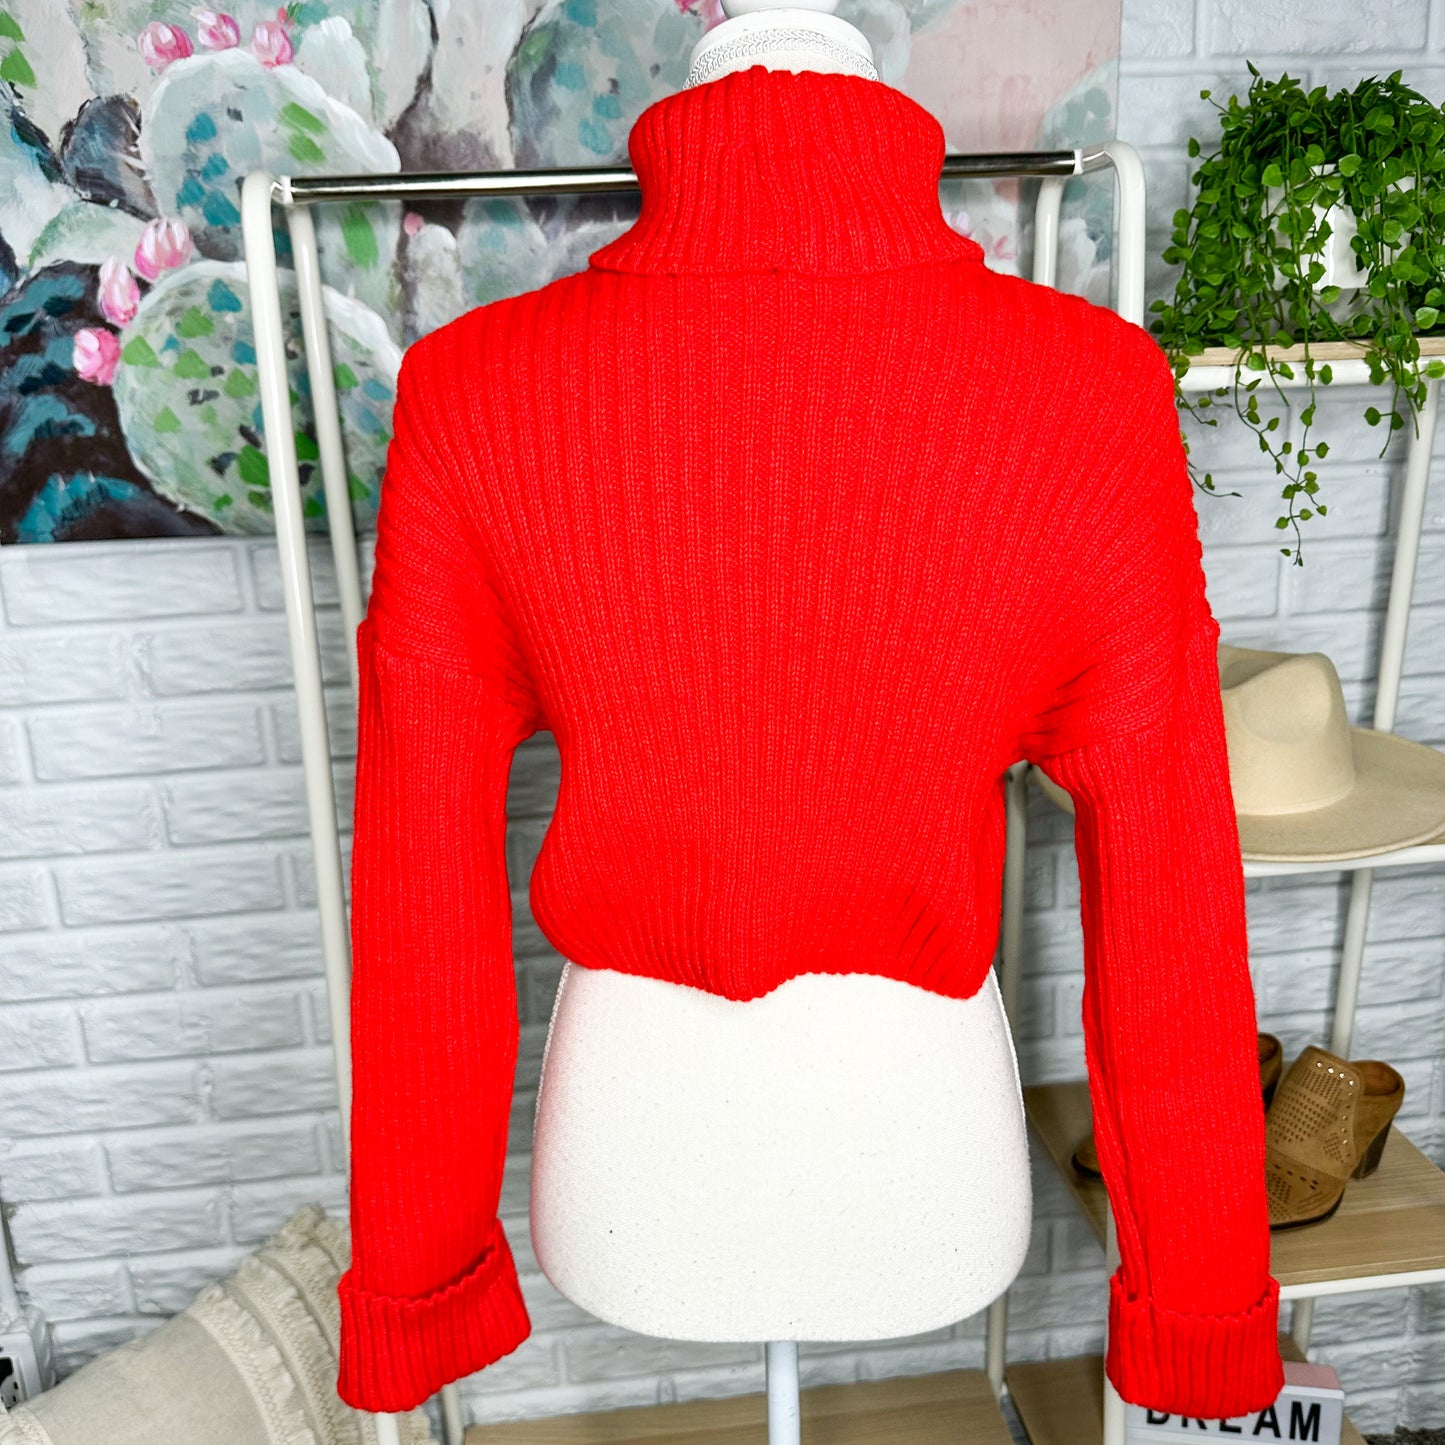 Goodnight Macaroon Red Yoyo Turtleneck Crop Sweater Size Large